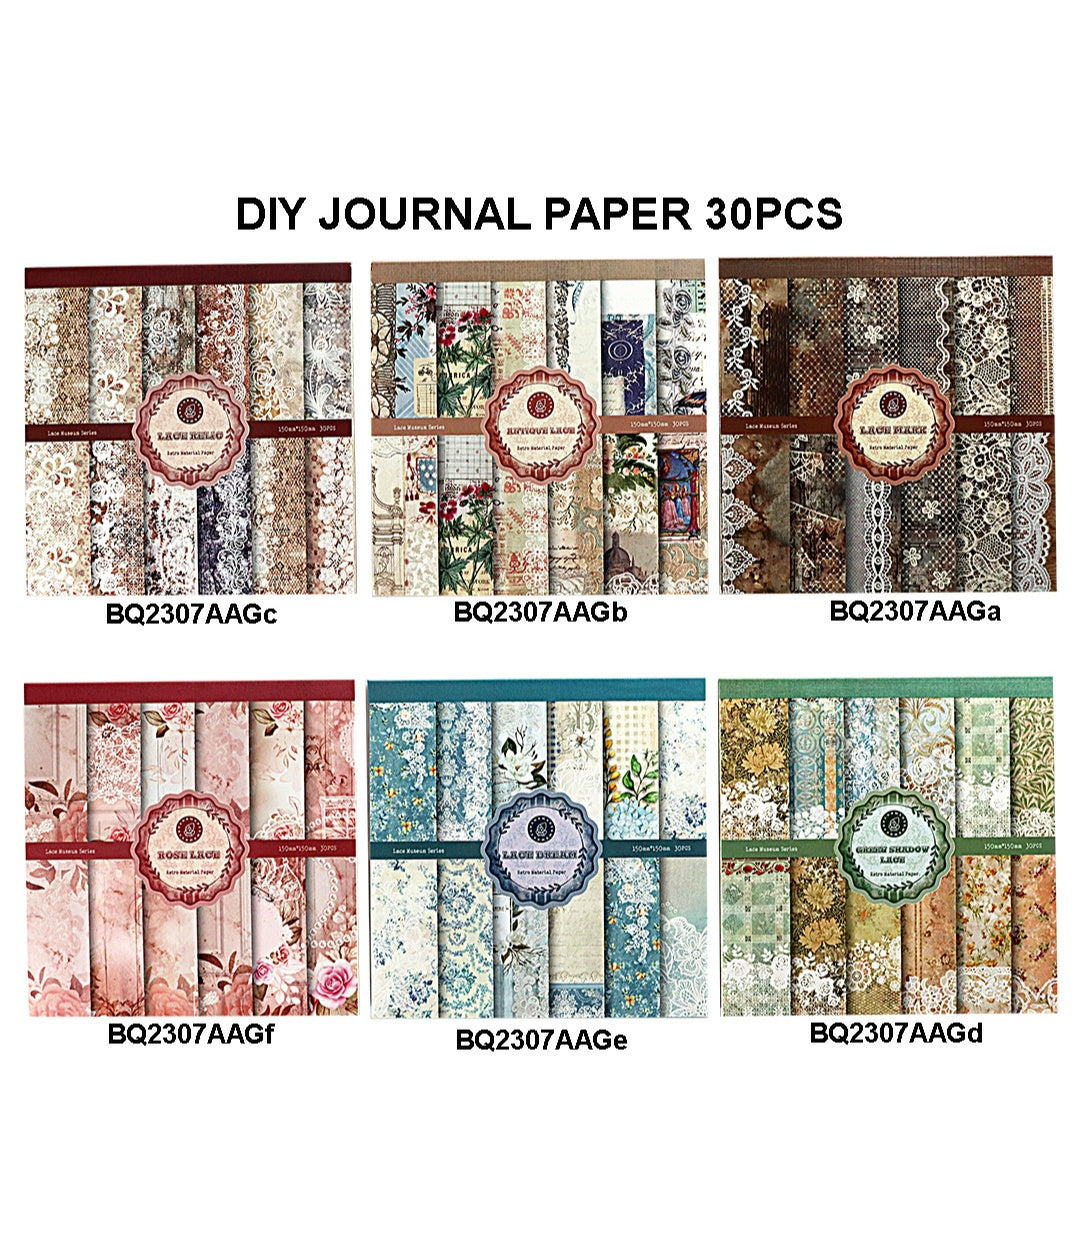 Diy Journal Paper 30Pcs 155 Bq2307Aag | INKARTO